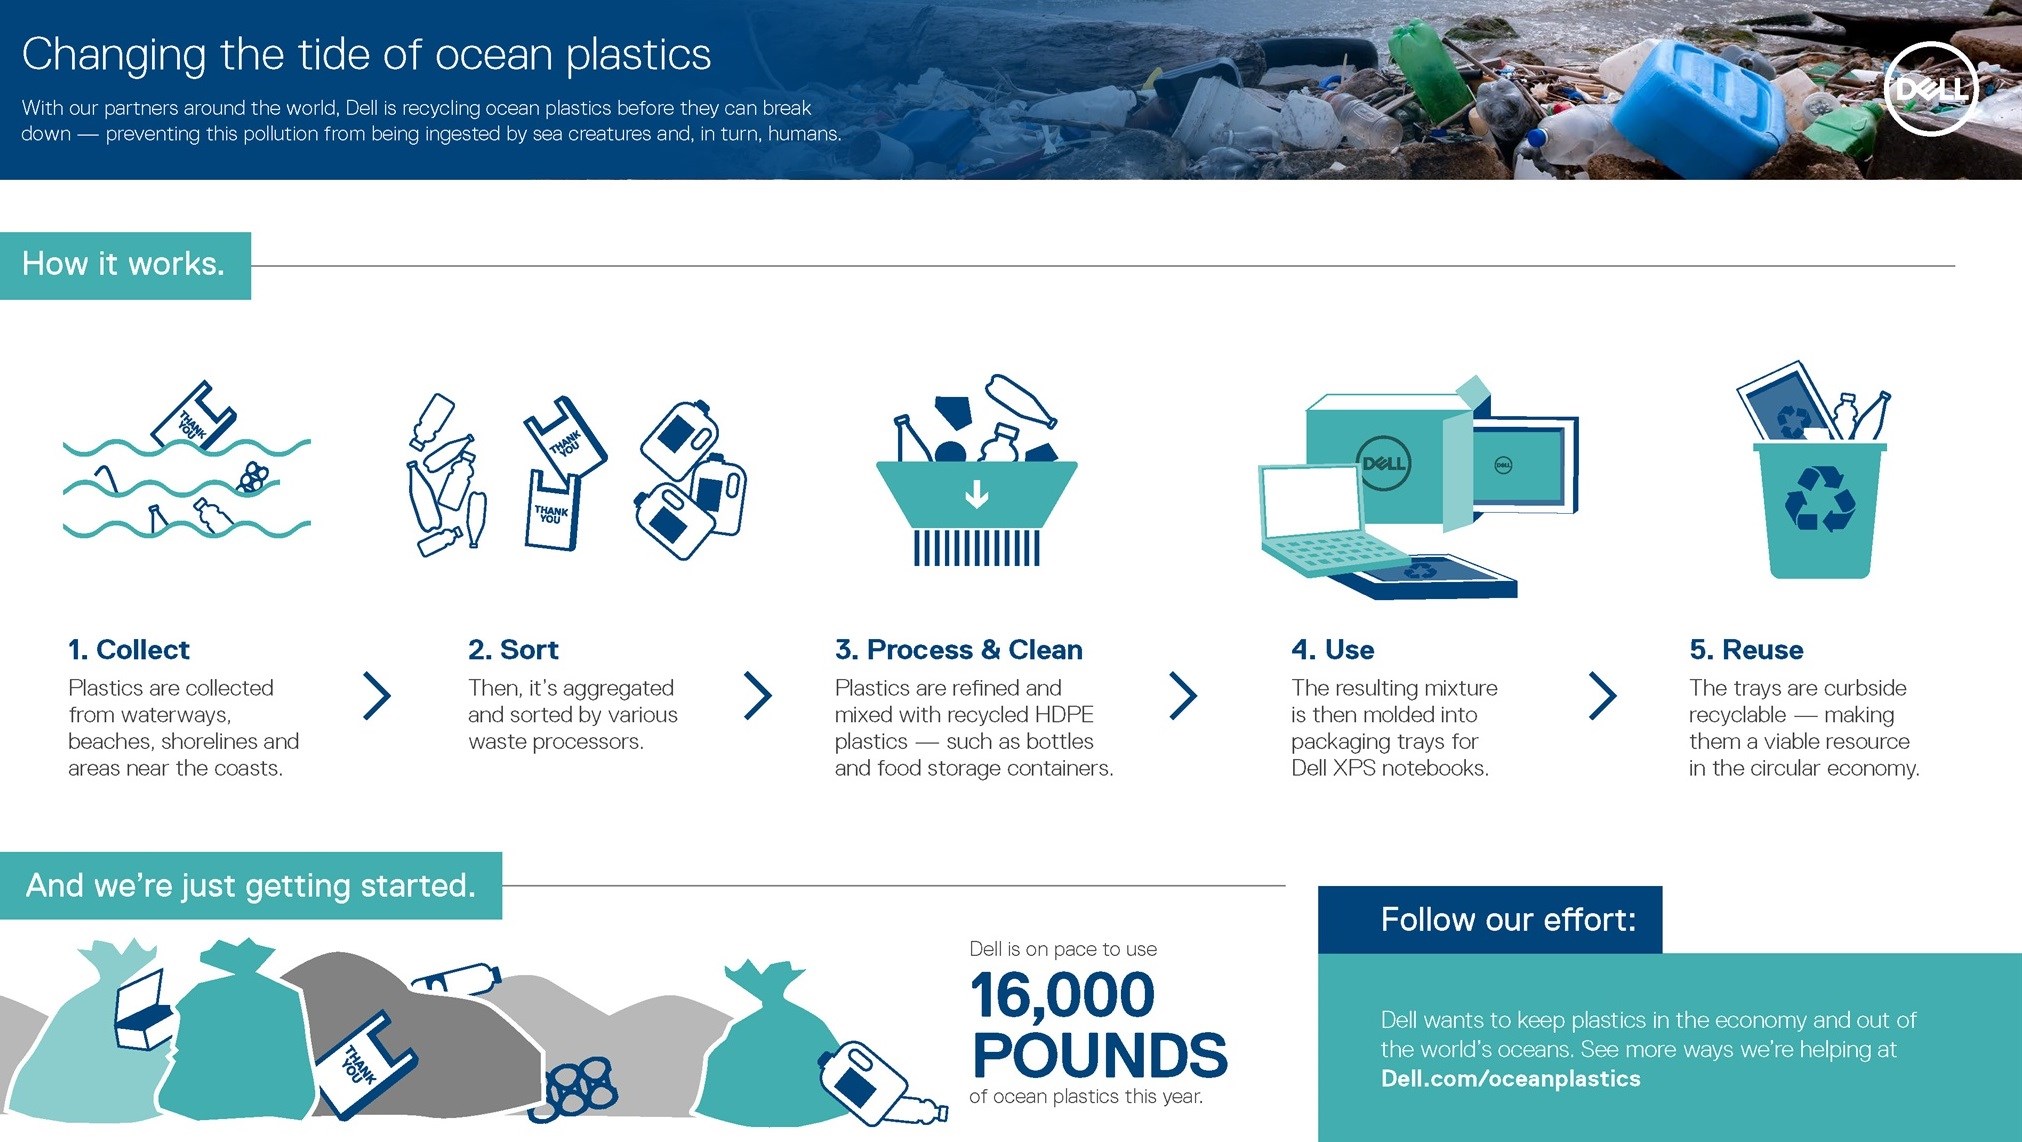 Tech industry's first shipment of ocean plastics packaging